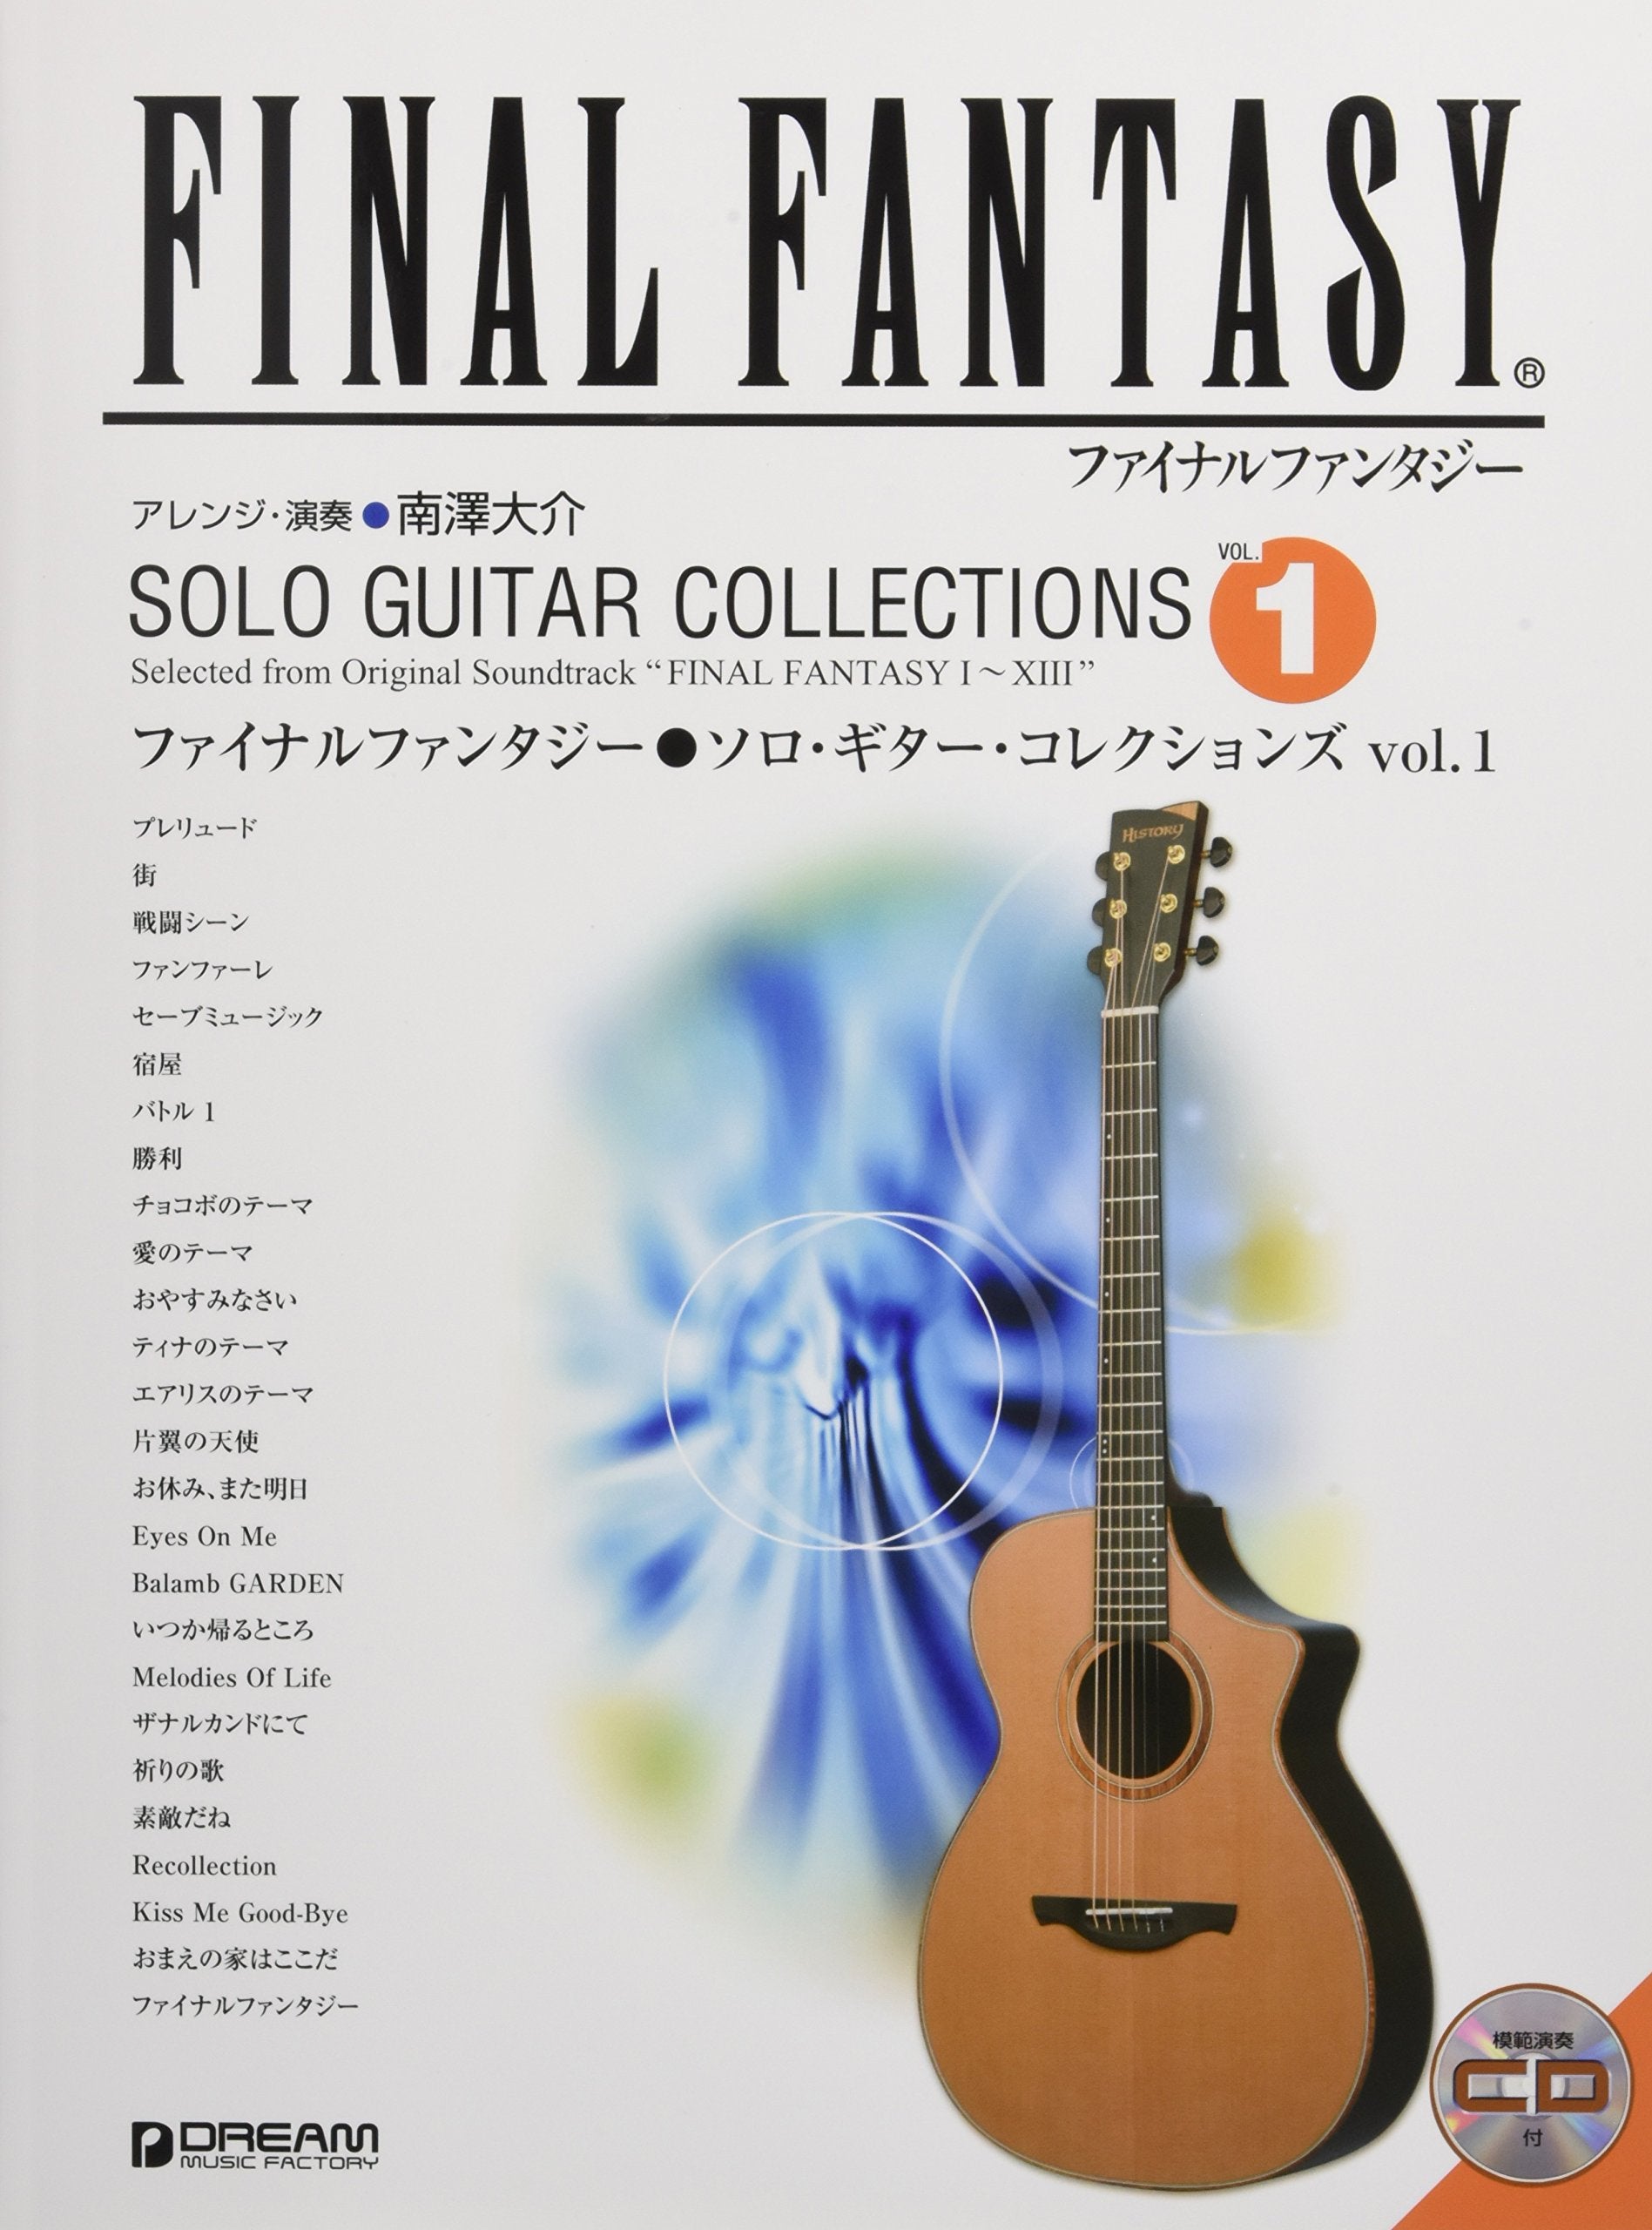 Final Fantasy: Solo Guitar Collections Vol. 1